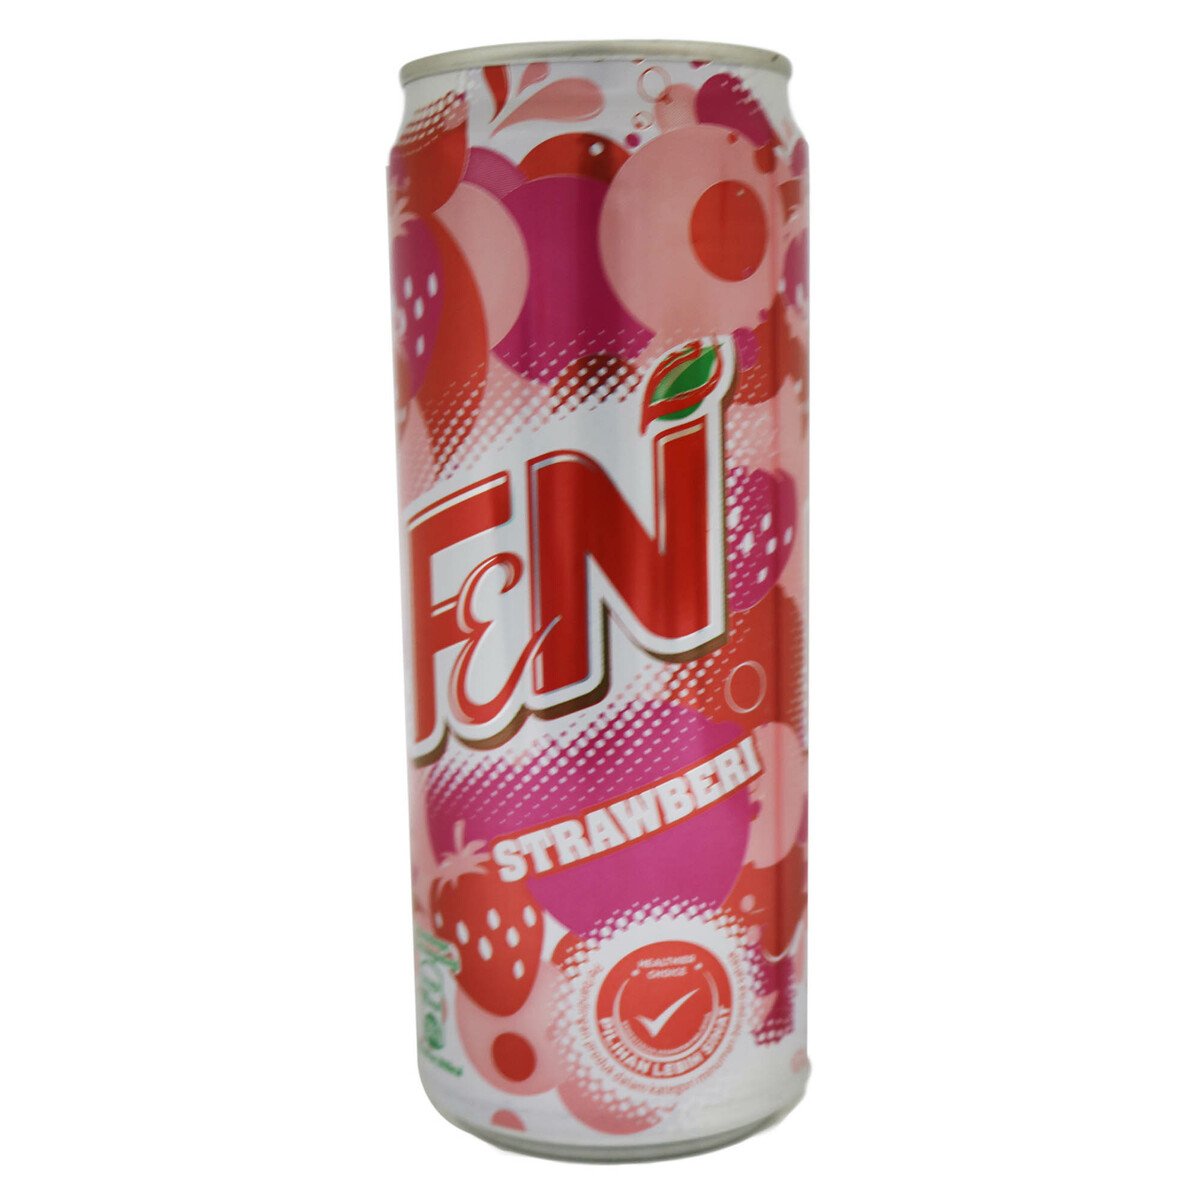 F&N Strawberry Can 325ml